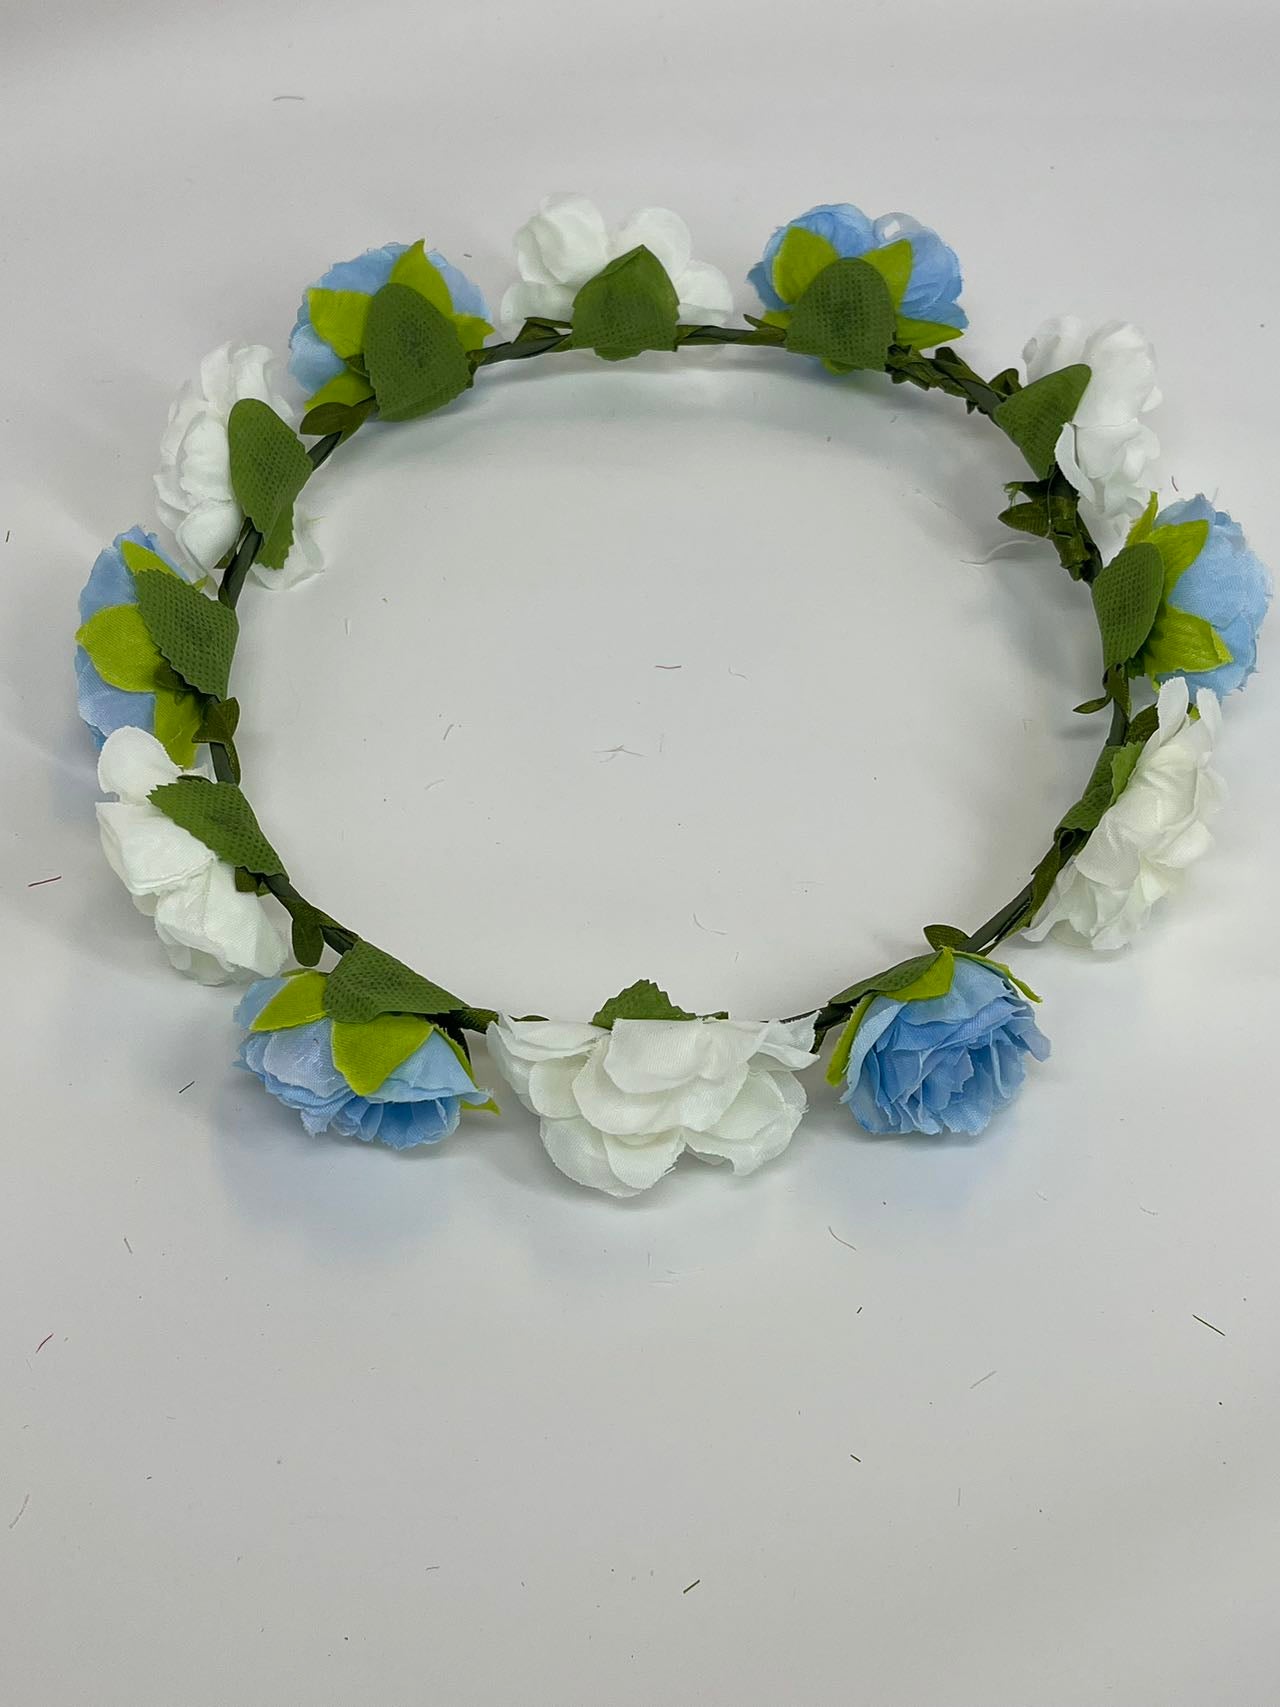 Cute Sweet Flower Decor Hair Bnad Flower Crown Hair Wreath Garland Headband Headpiece with Ribbon Festival Wedding Party Supplies